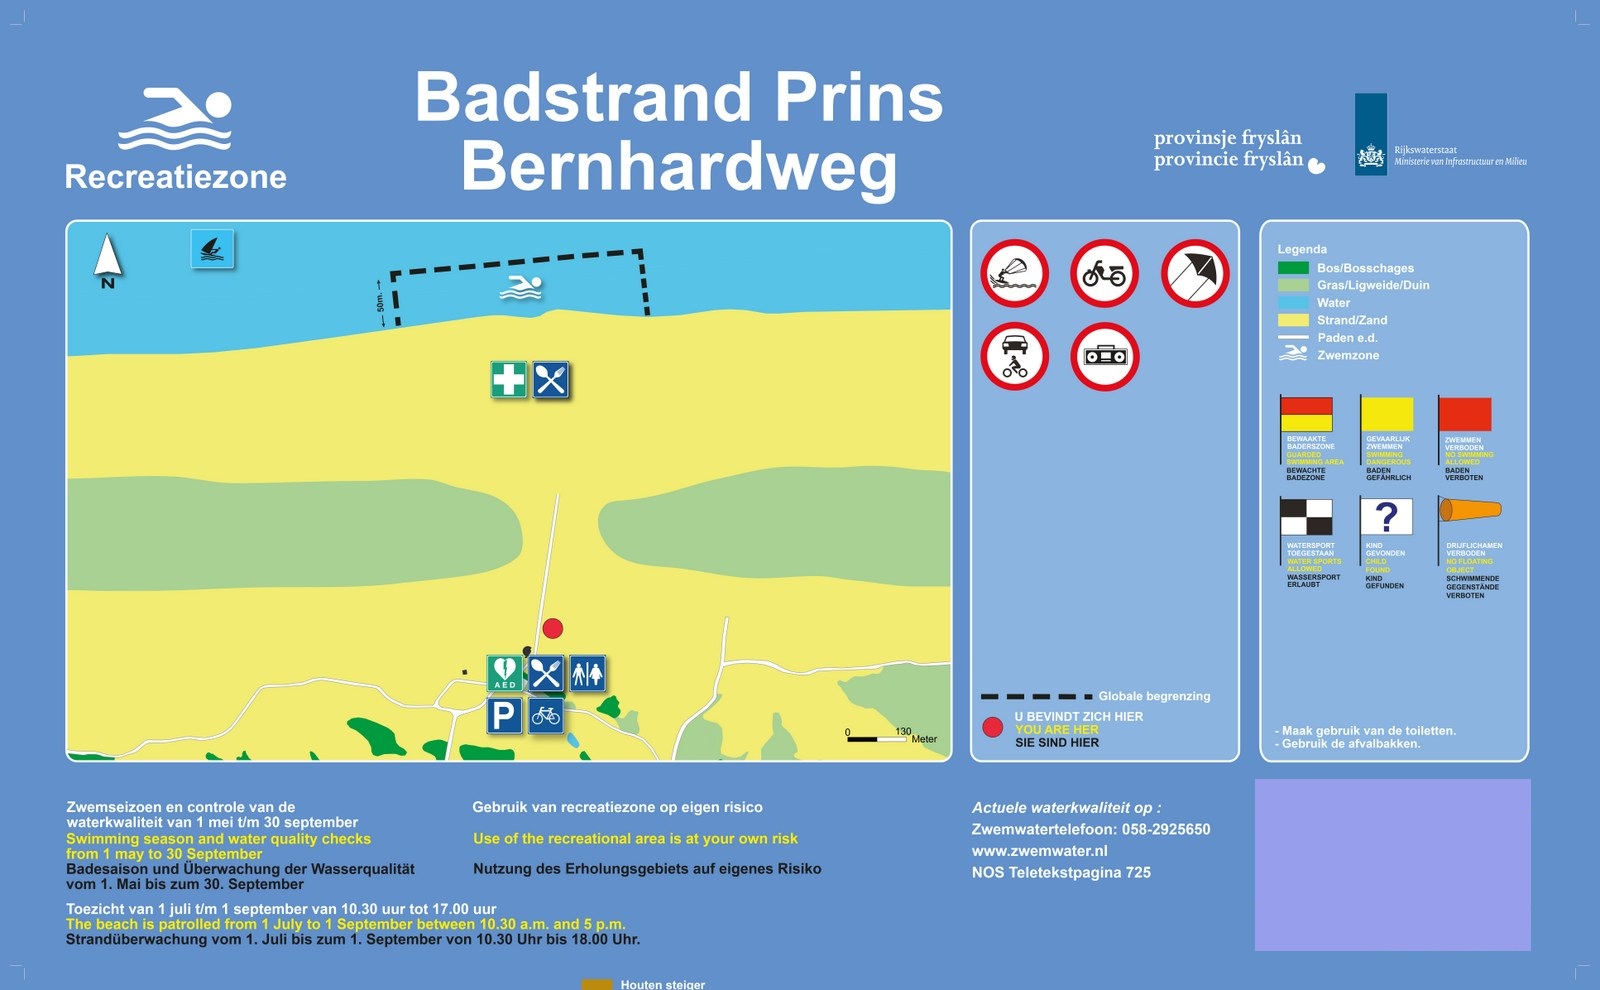 The information board at the swimming location Badstrand Prins Bernhardweg